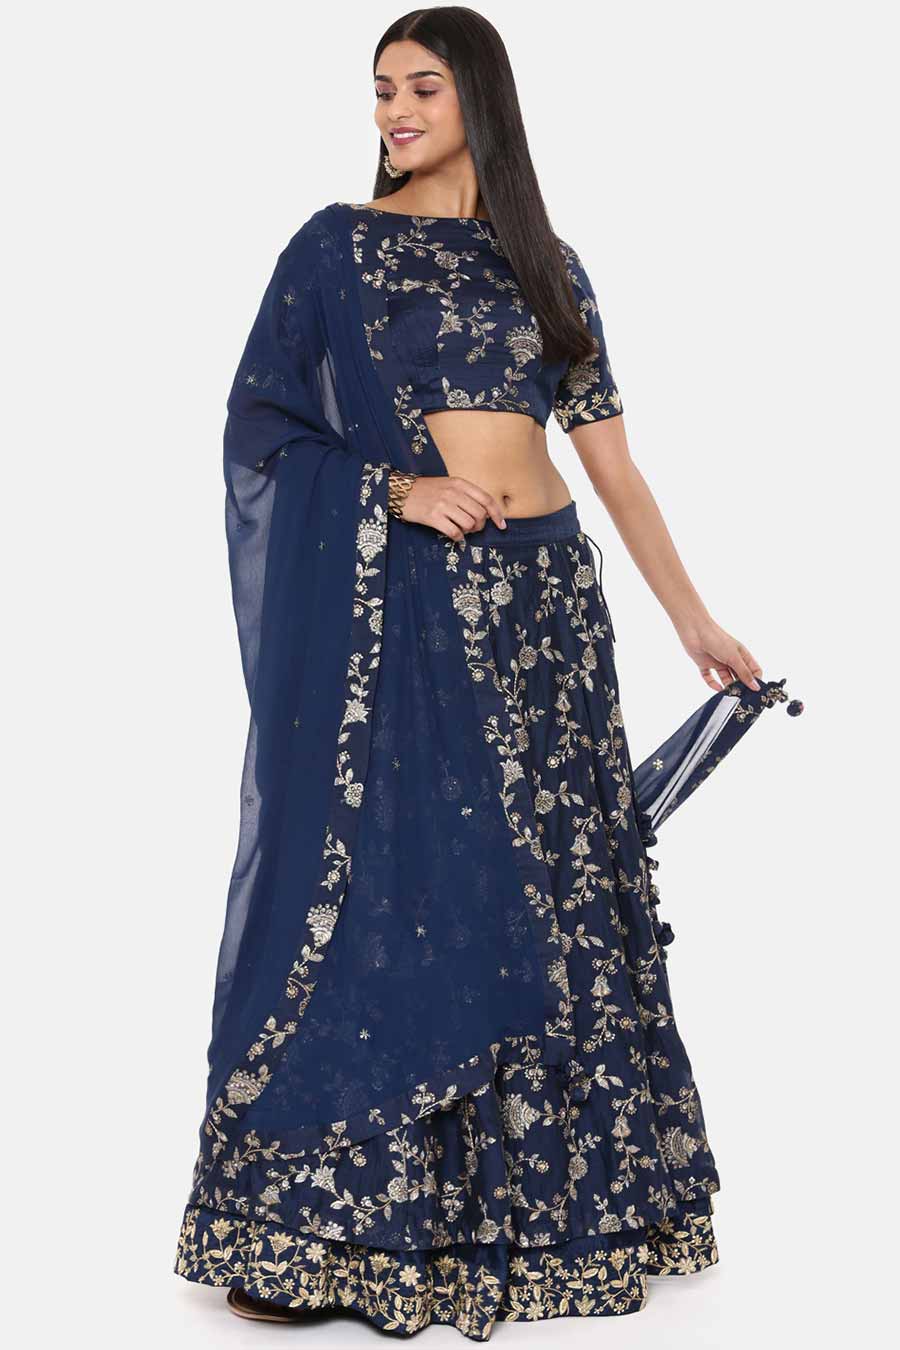 Blue Chanderi Embroidered Skirt